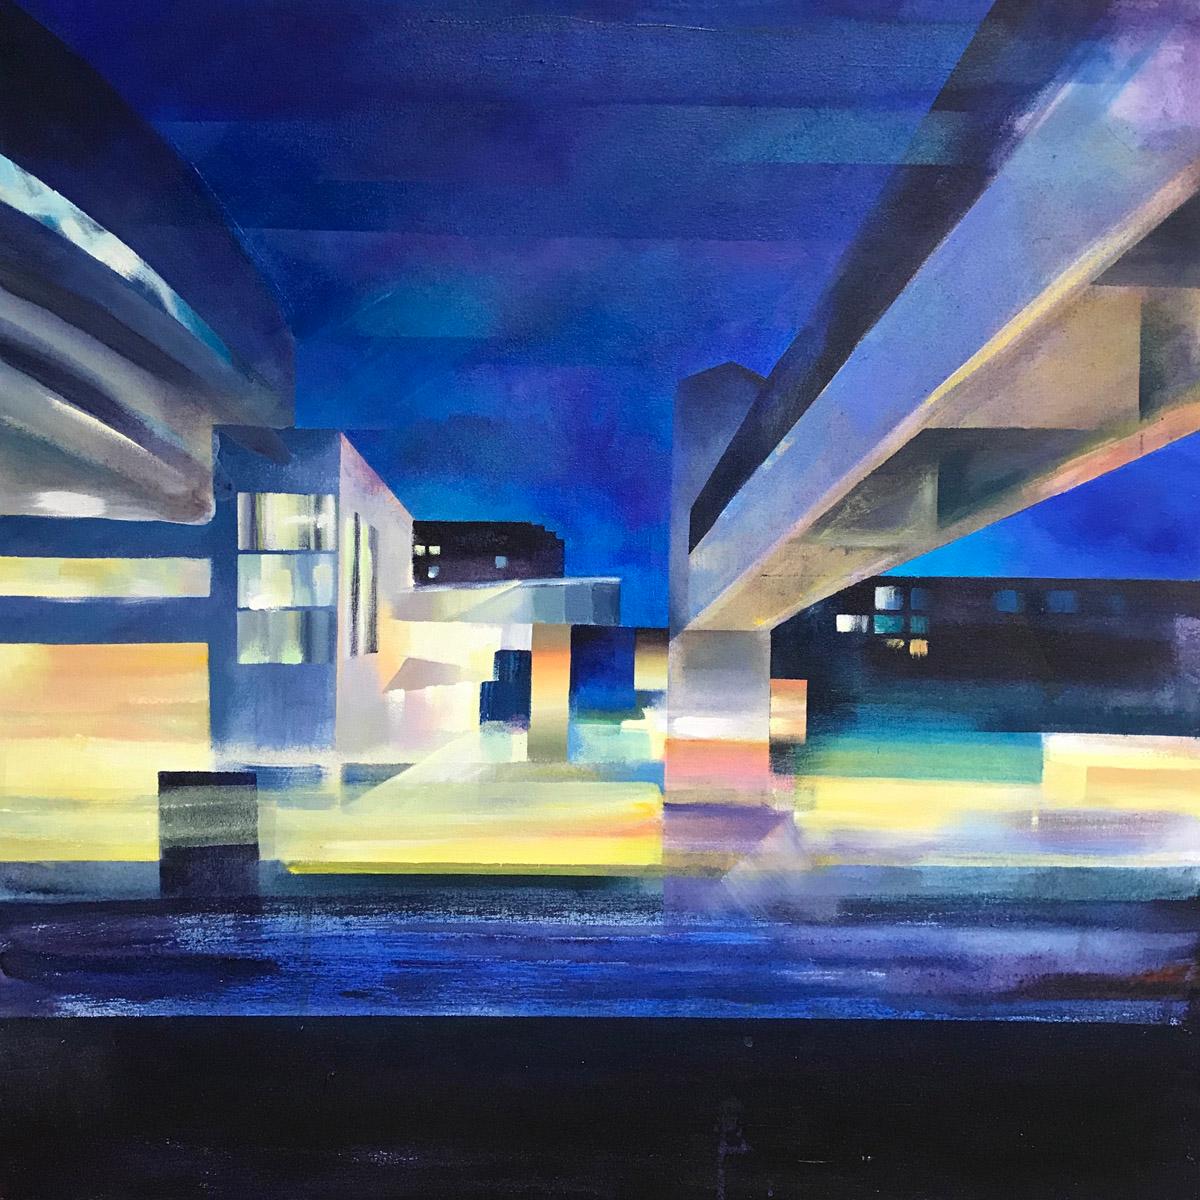 Night Bridge II - Colour Rich Urban Landscape, Acrylic on Canvas